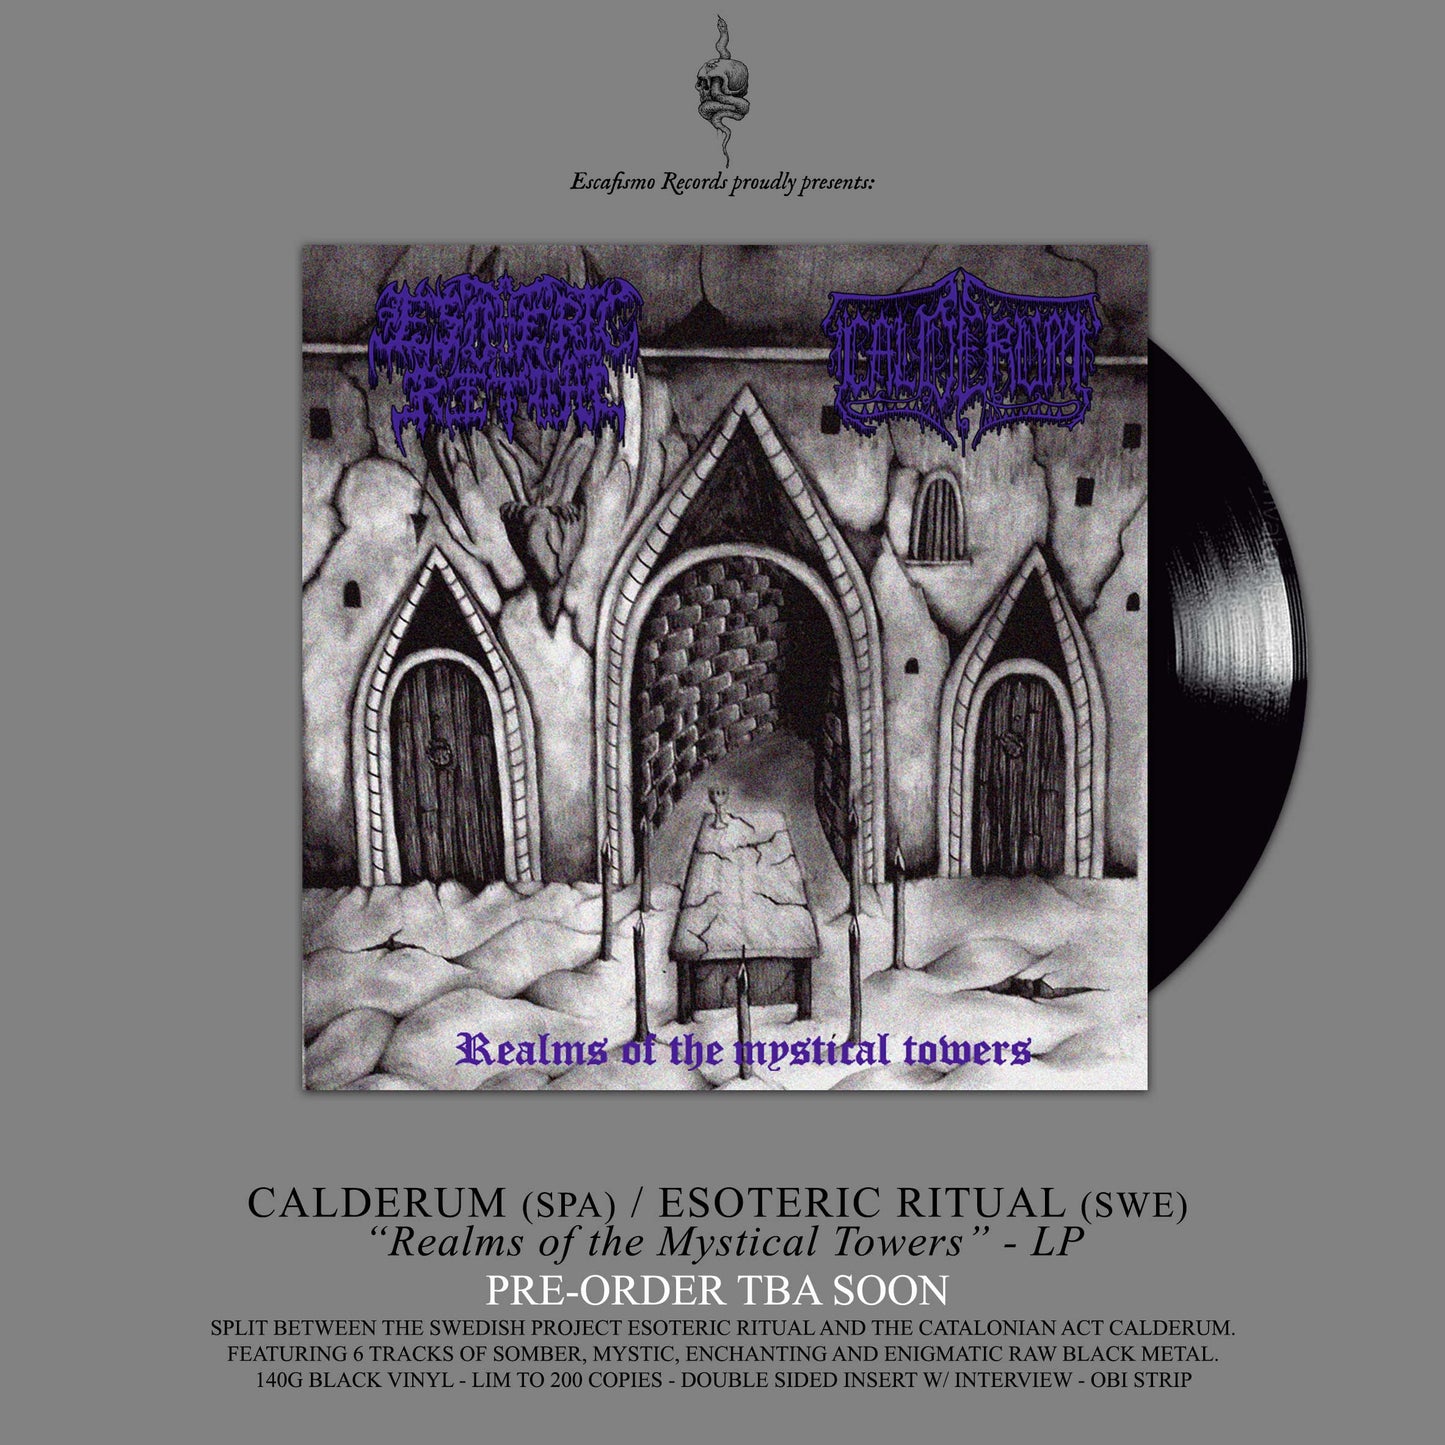 ESCR-LP002: Calderum (ES) / Esoteric Ritual (Swe) "Realms of the Mystical Towers" - 12" LP